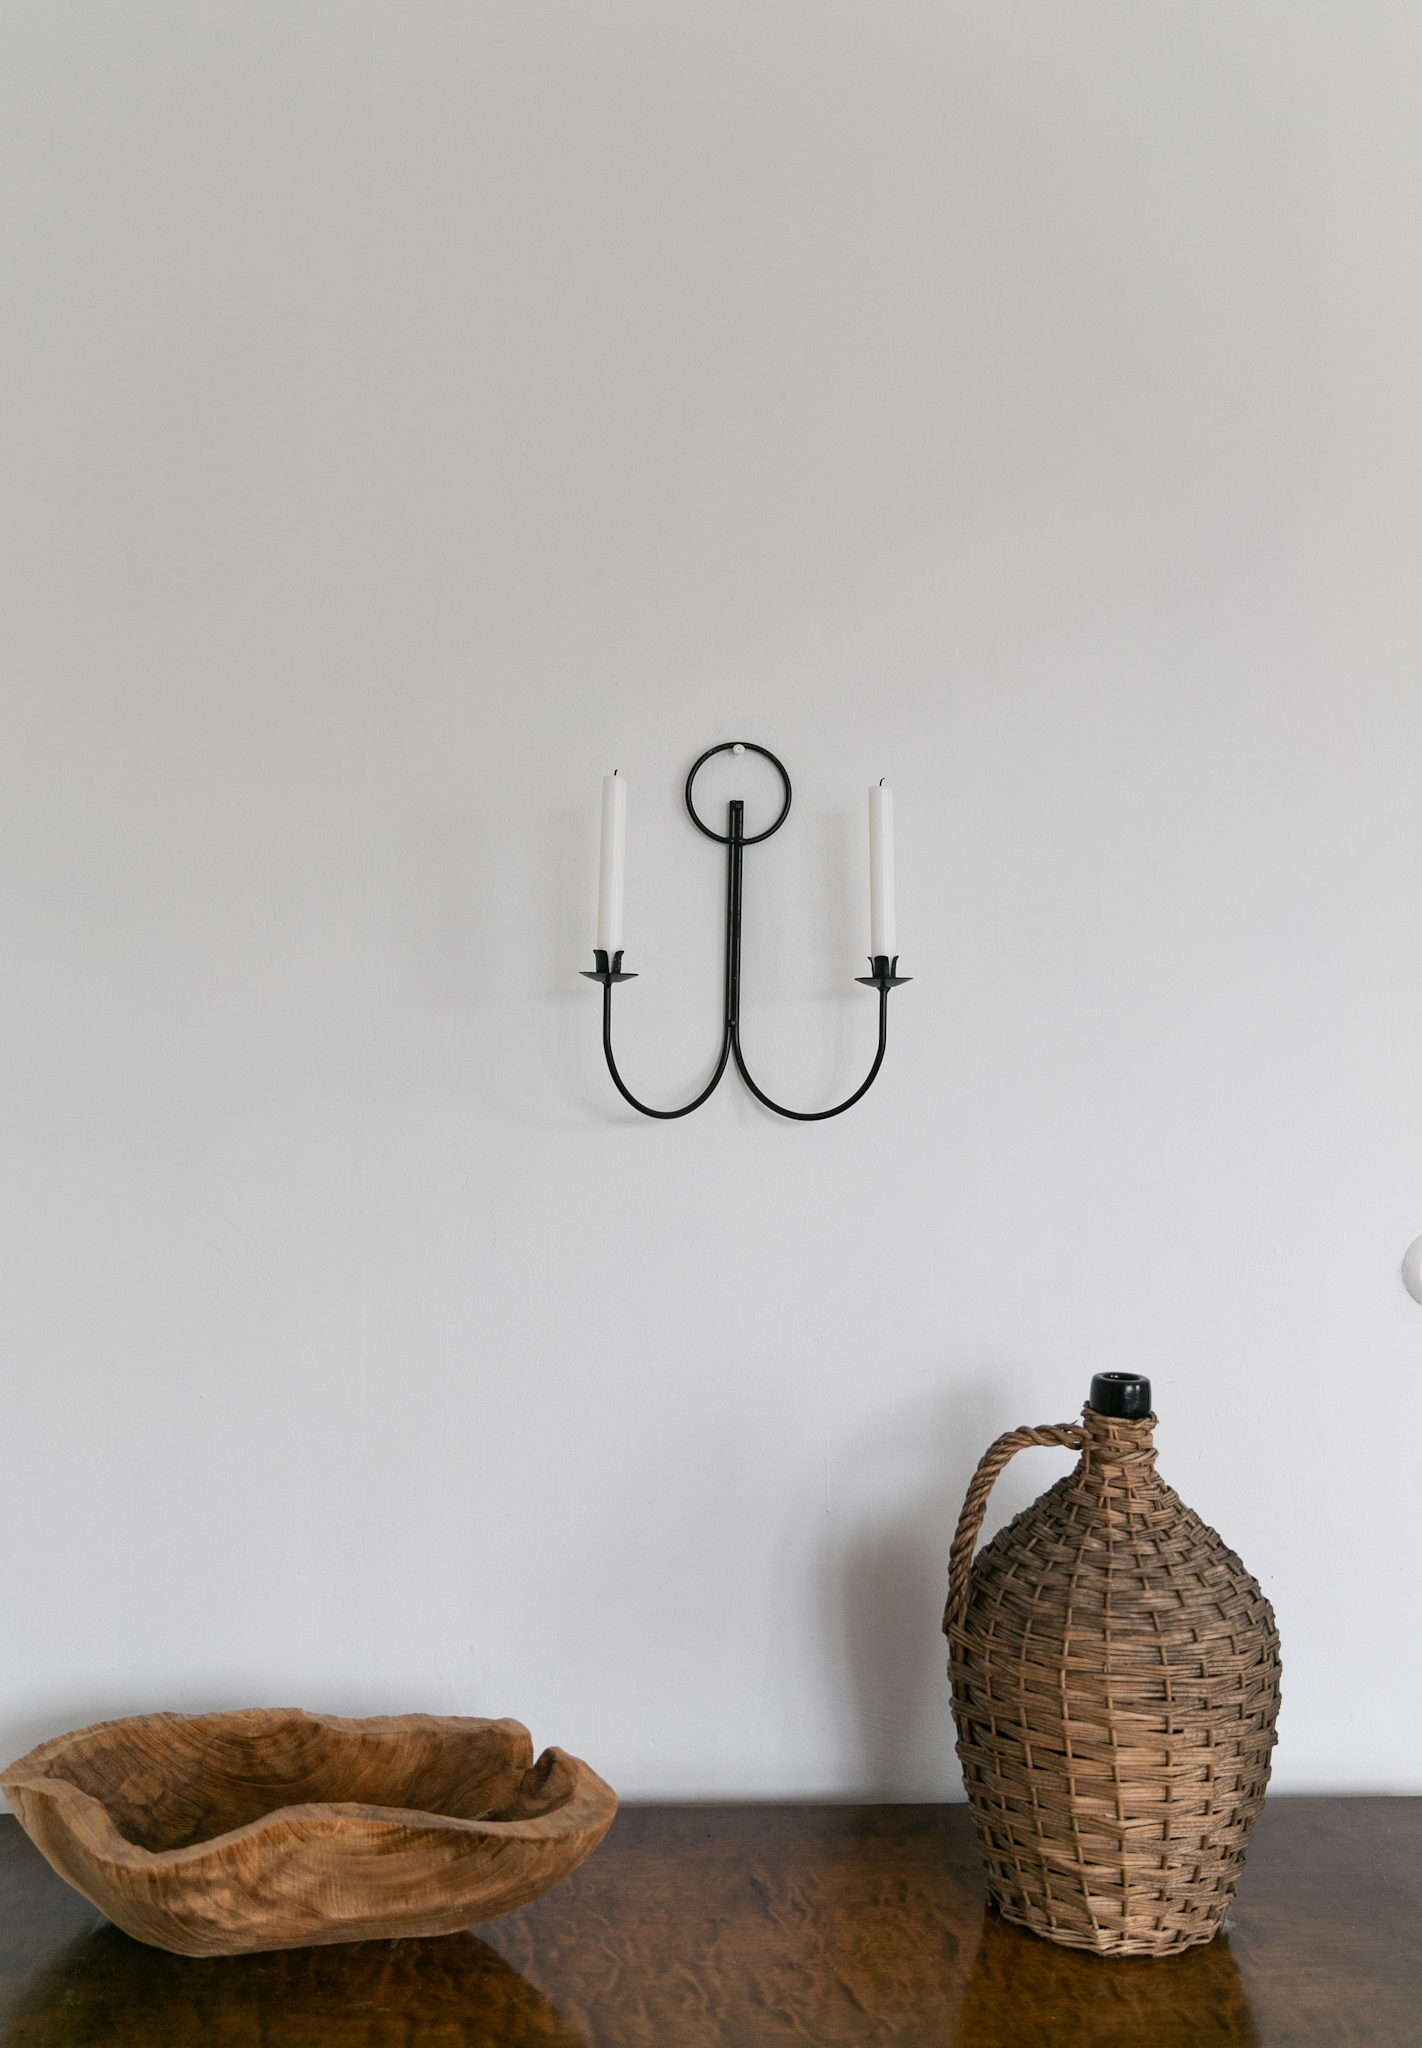 Minimalistic wall-mount candle holder